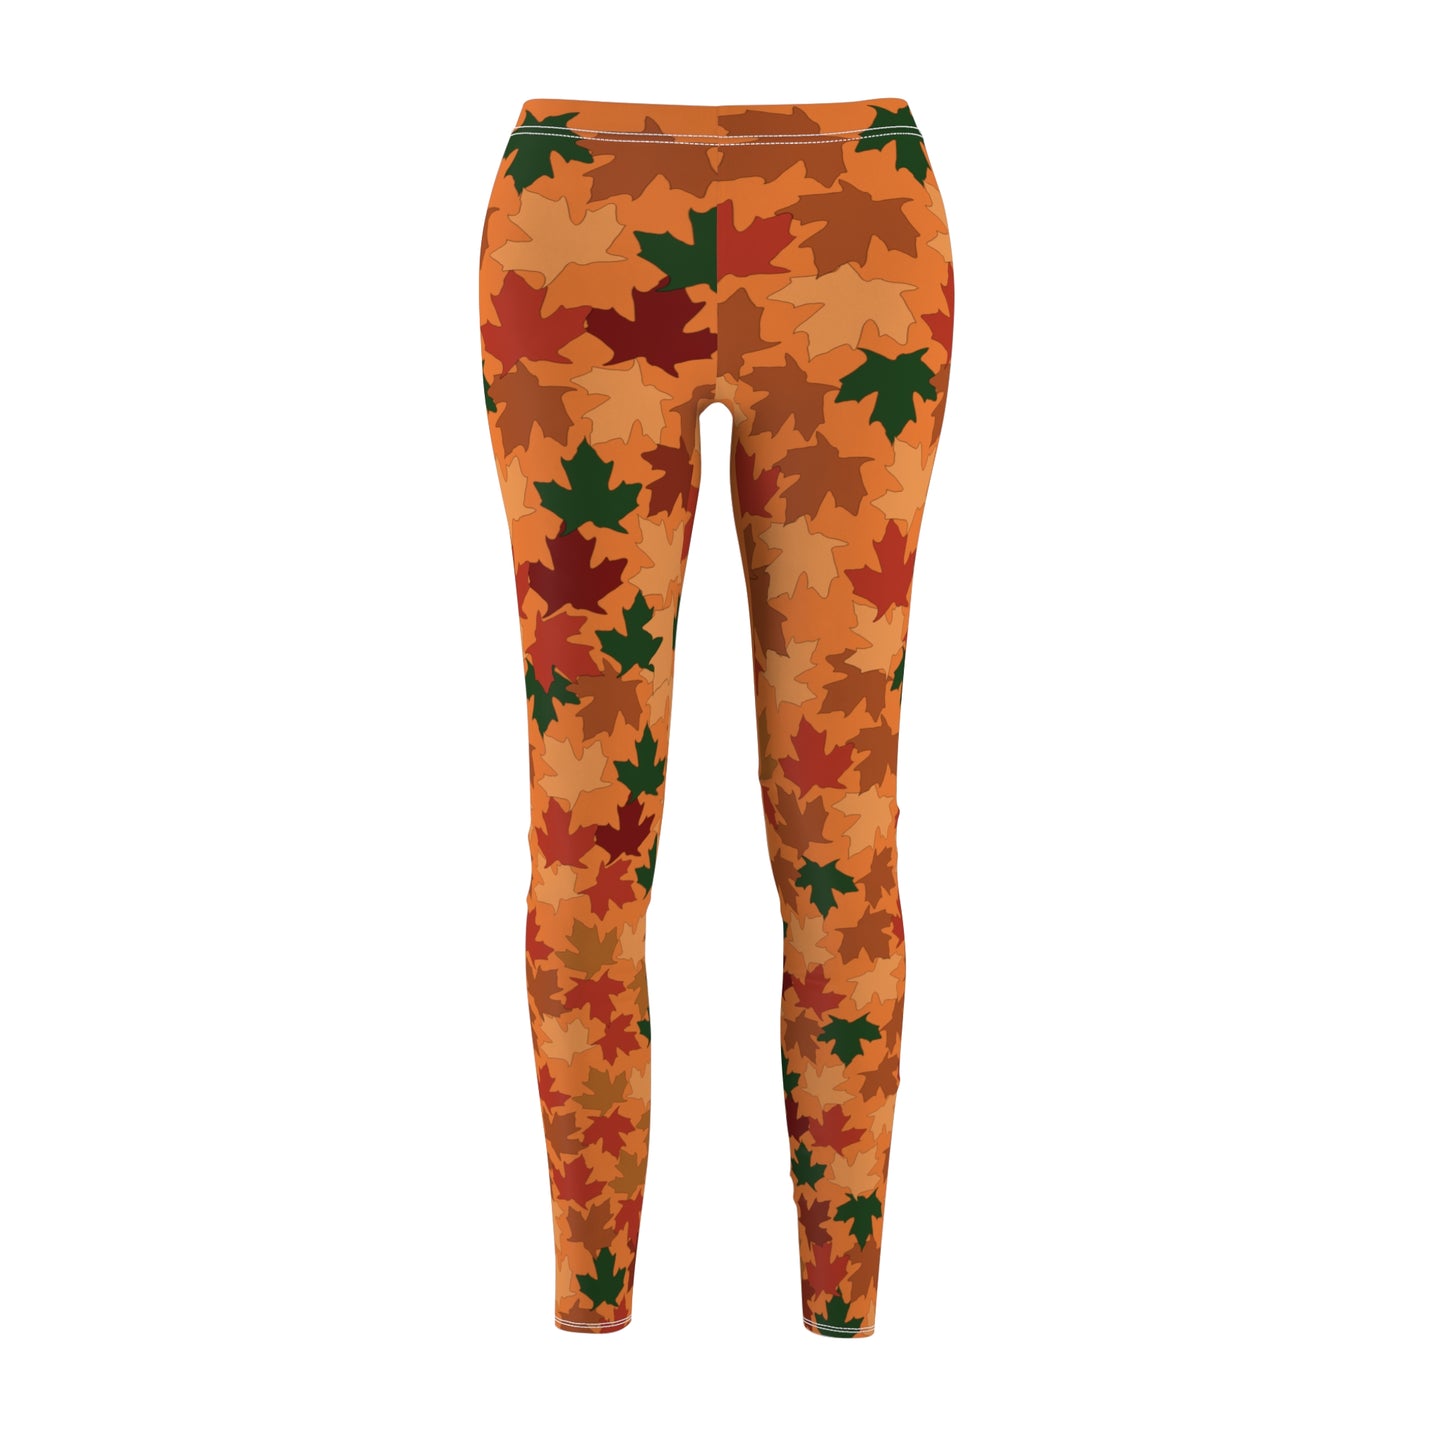 Fall Leaf Leggings for Women, orange background, warm, comfy, gift for her, gift for teacher, athleisure, Autmn season, Fall season